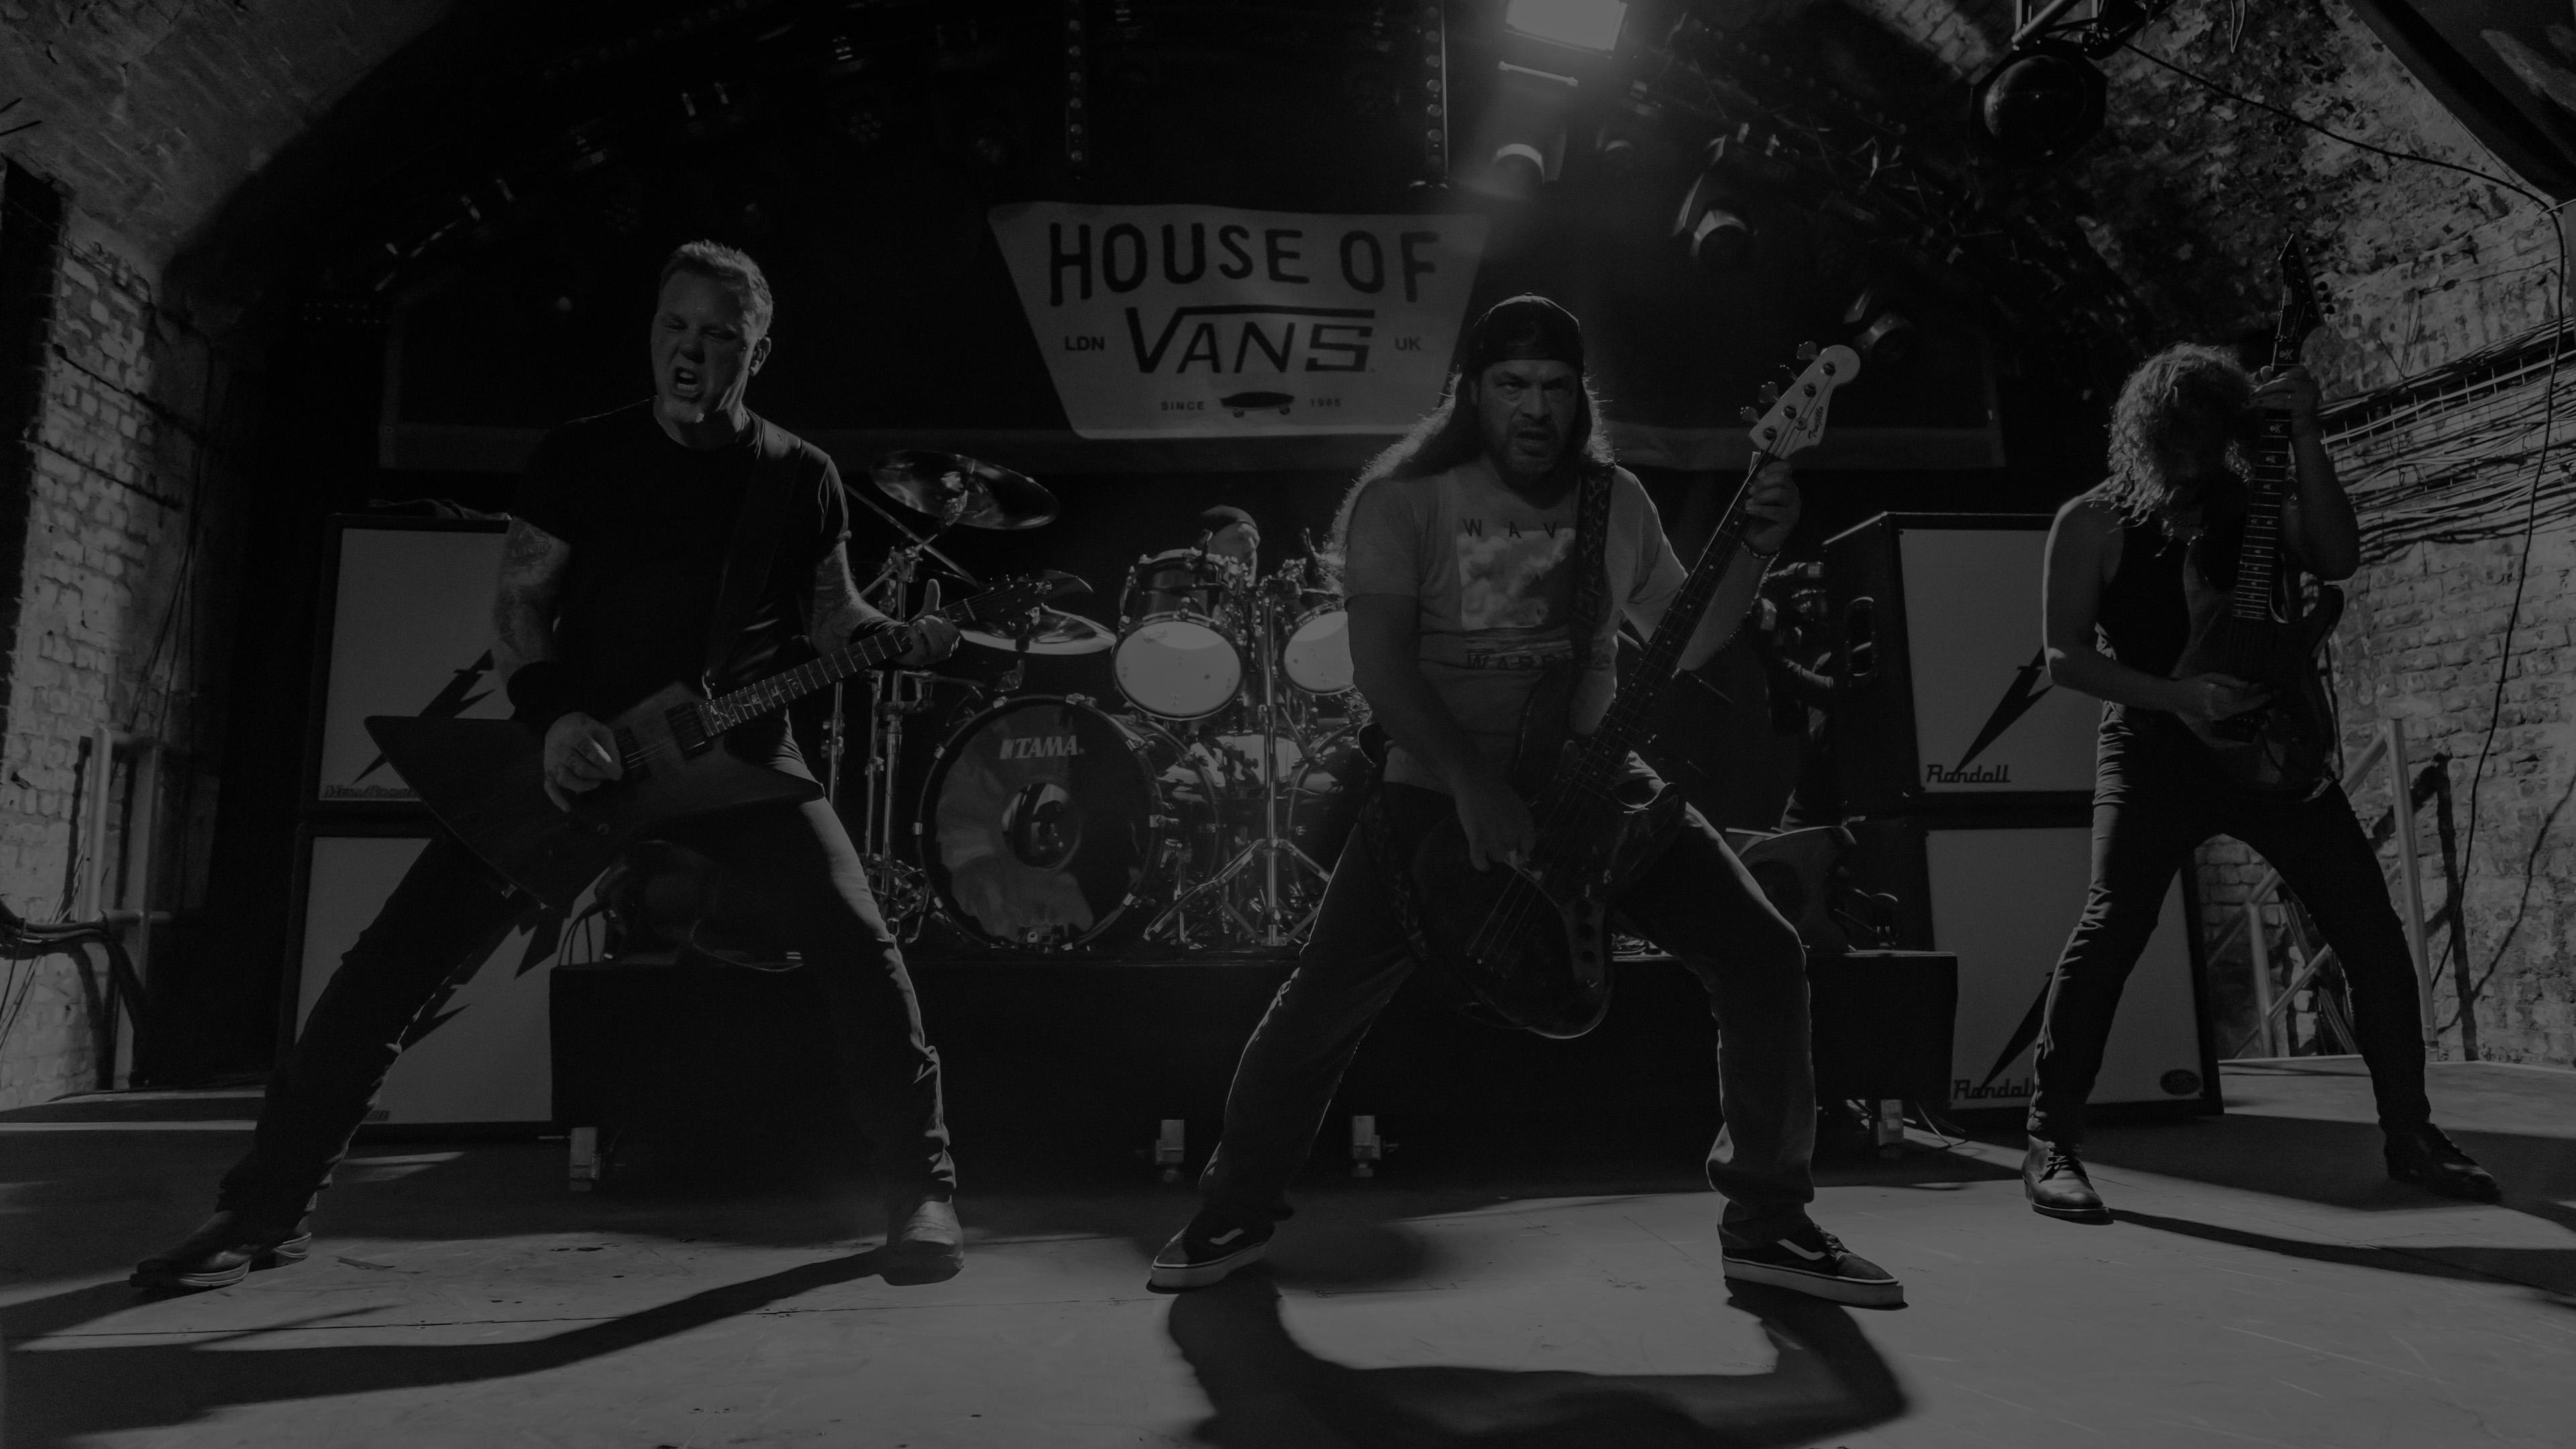 Metallica at House of Vans in London, England on November 18, 2016